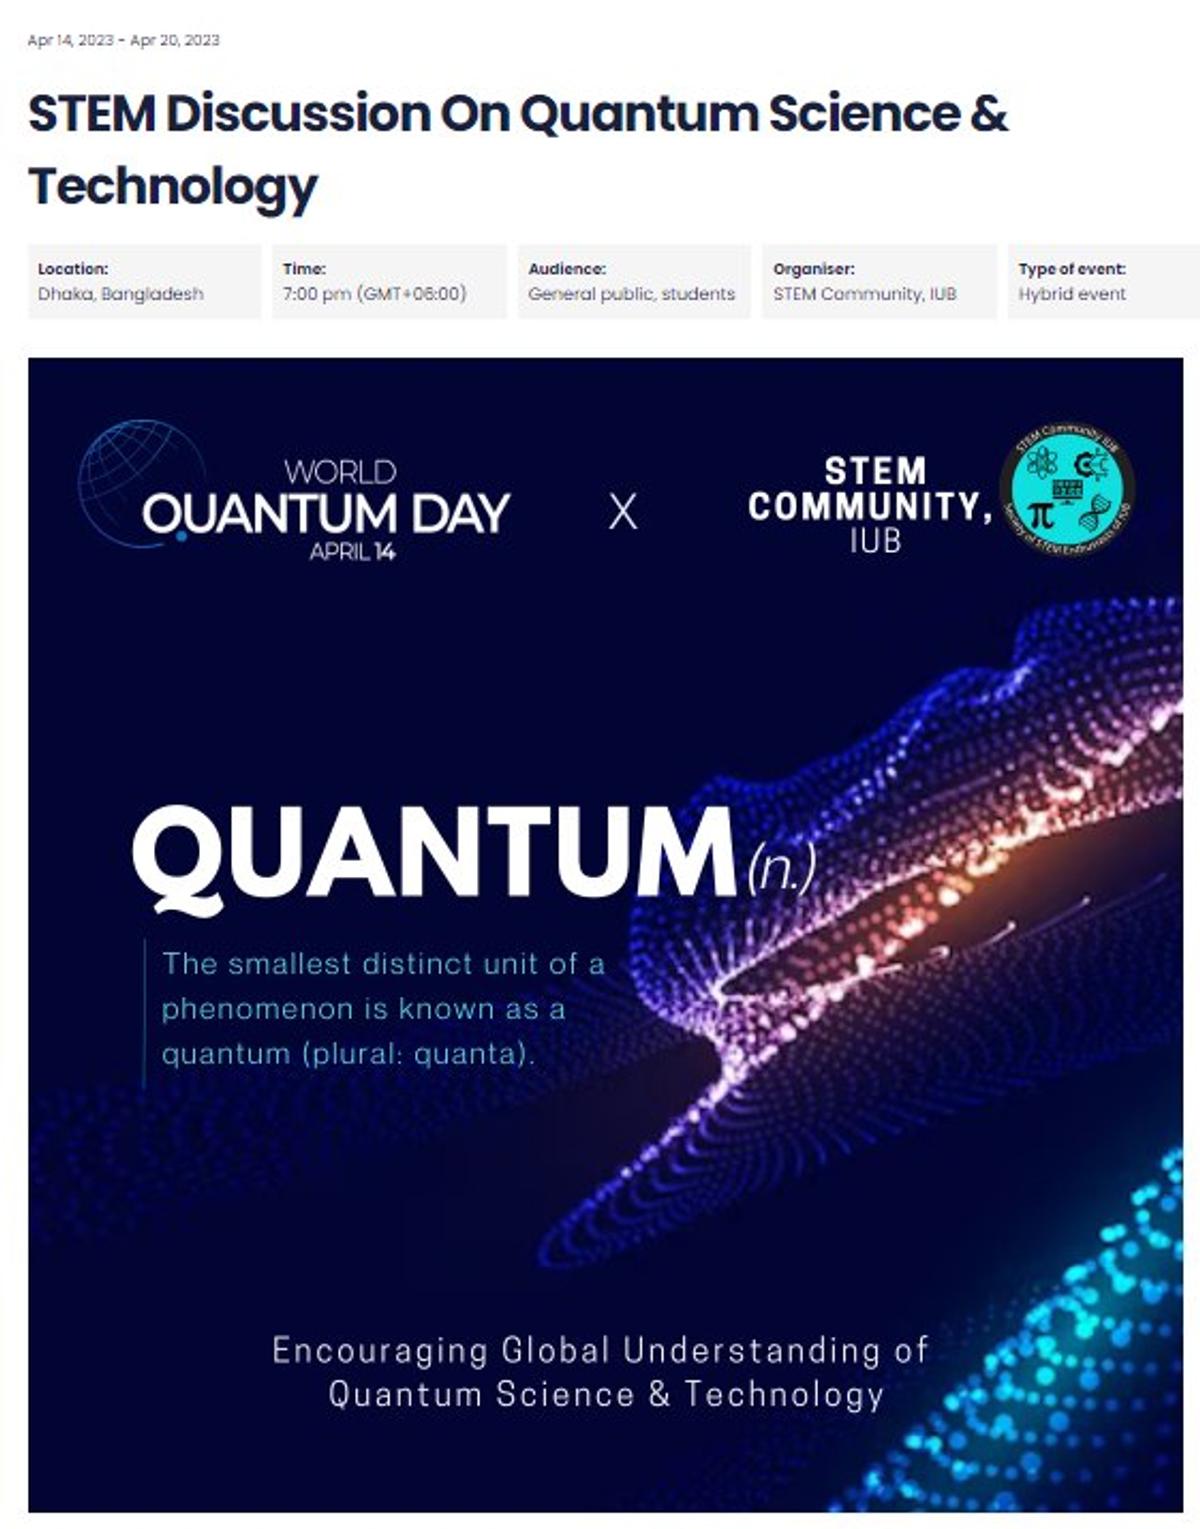 STEM Community, IUB X World Quantum Day